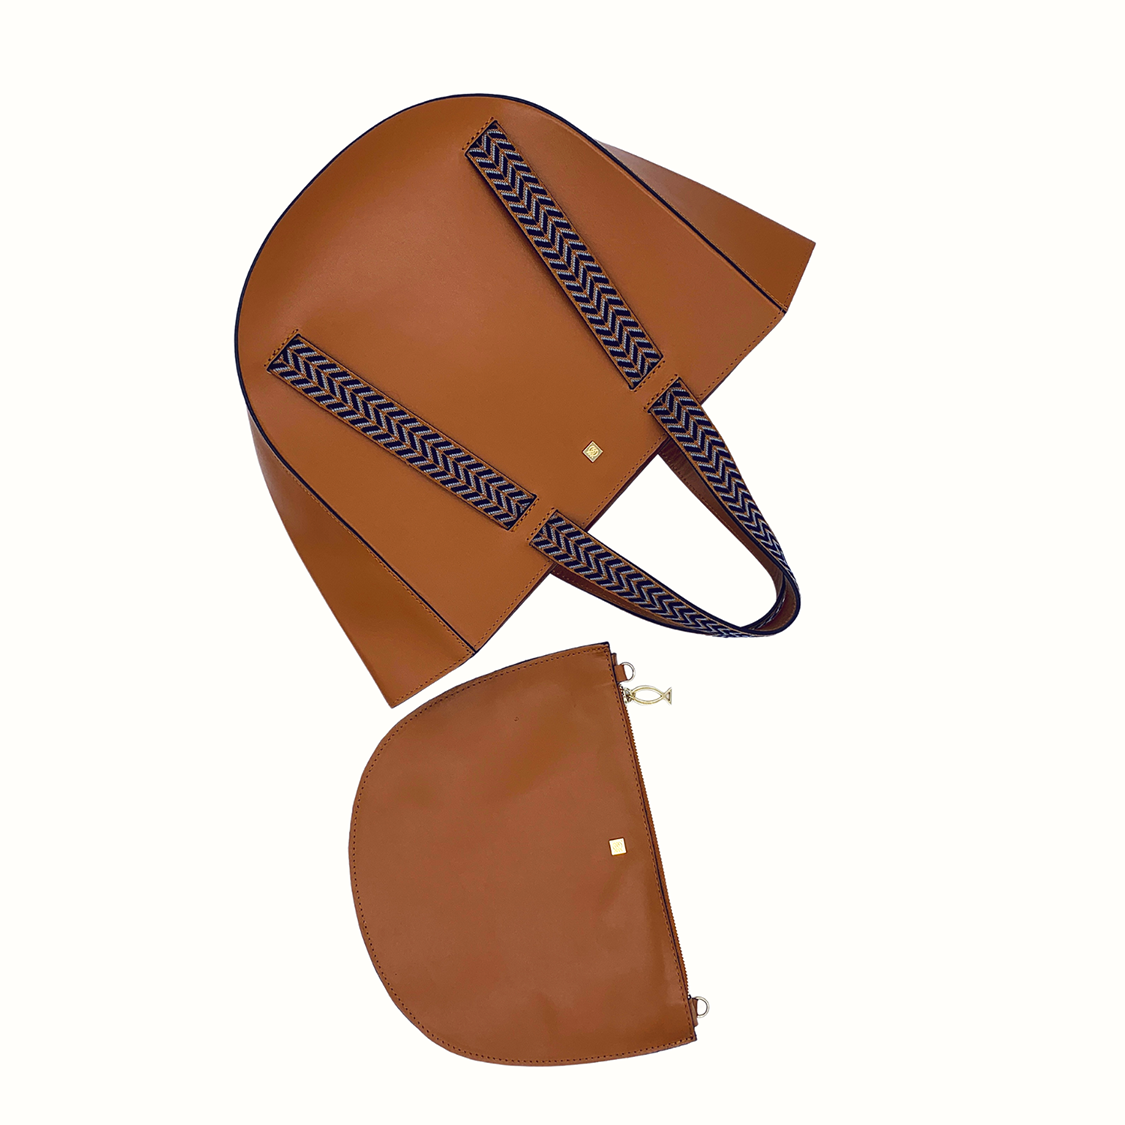 brown leather tote bag #color_herringbone-camel